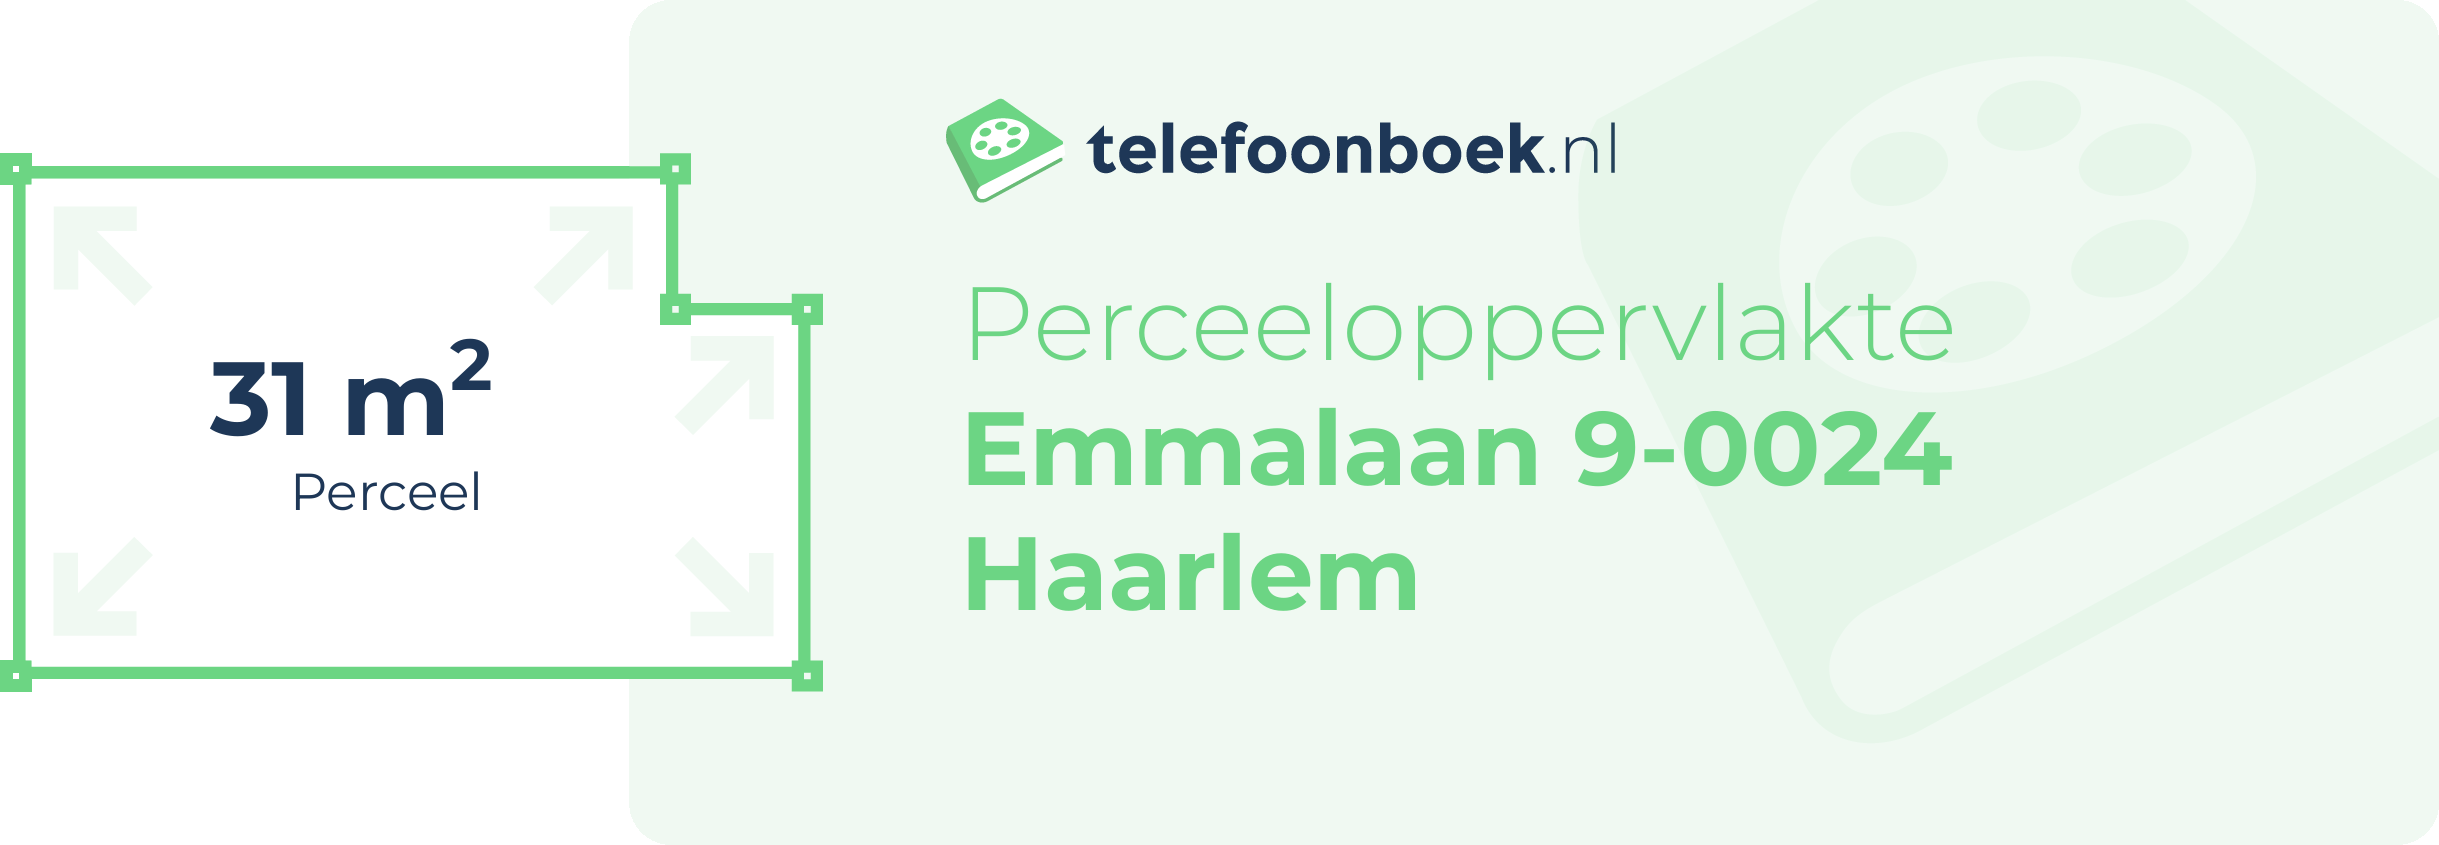 Perceeloppervlakte Emmalaan 9-0024 Haarlem